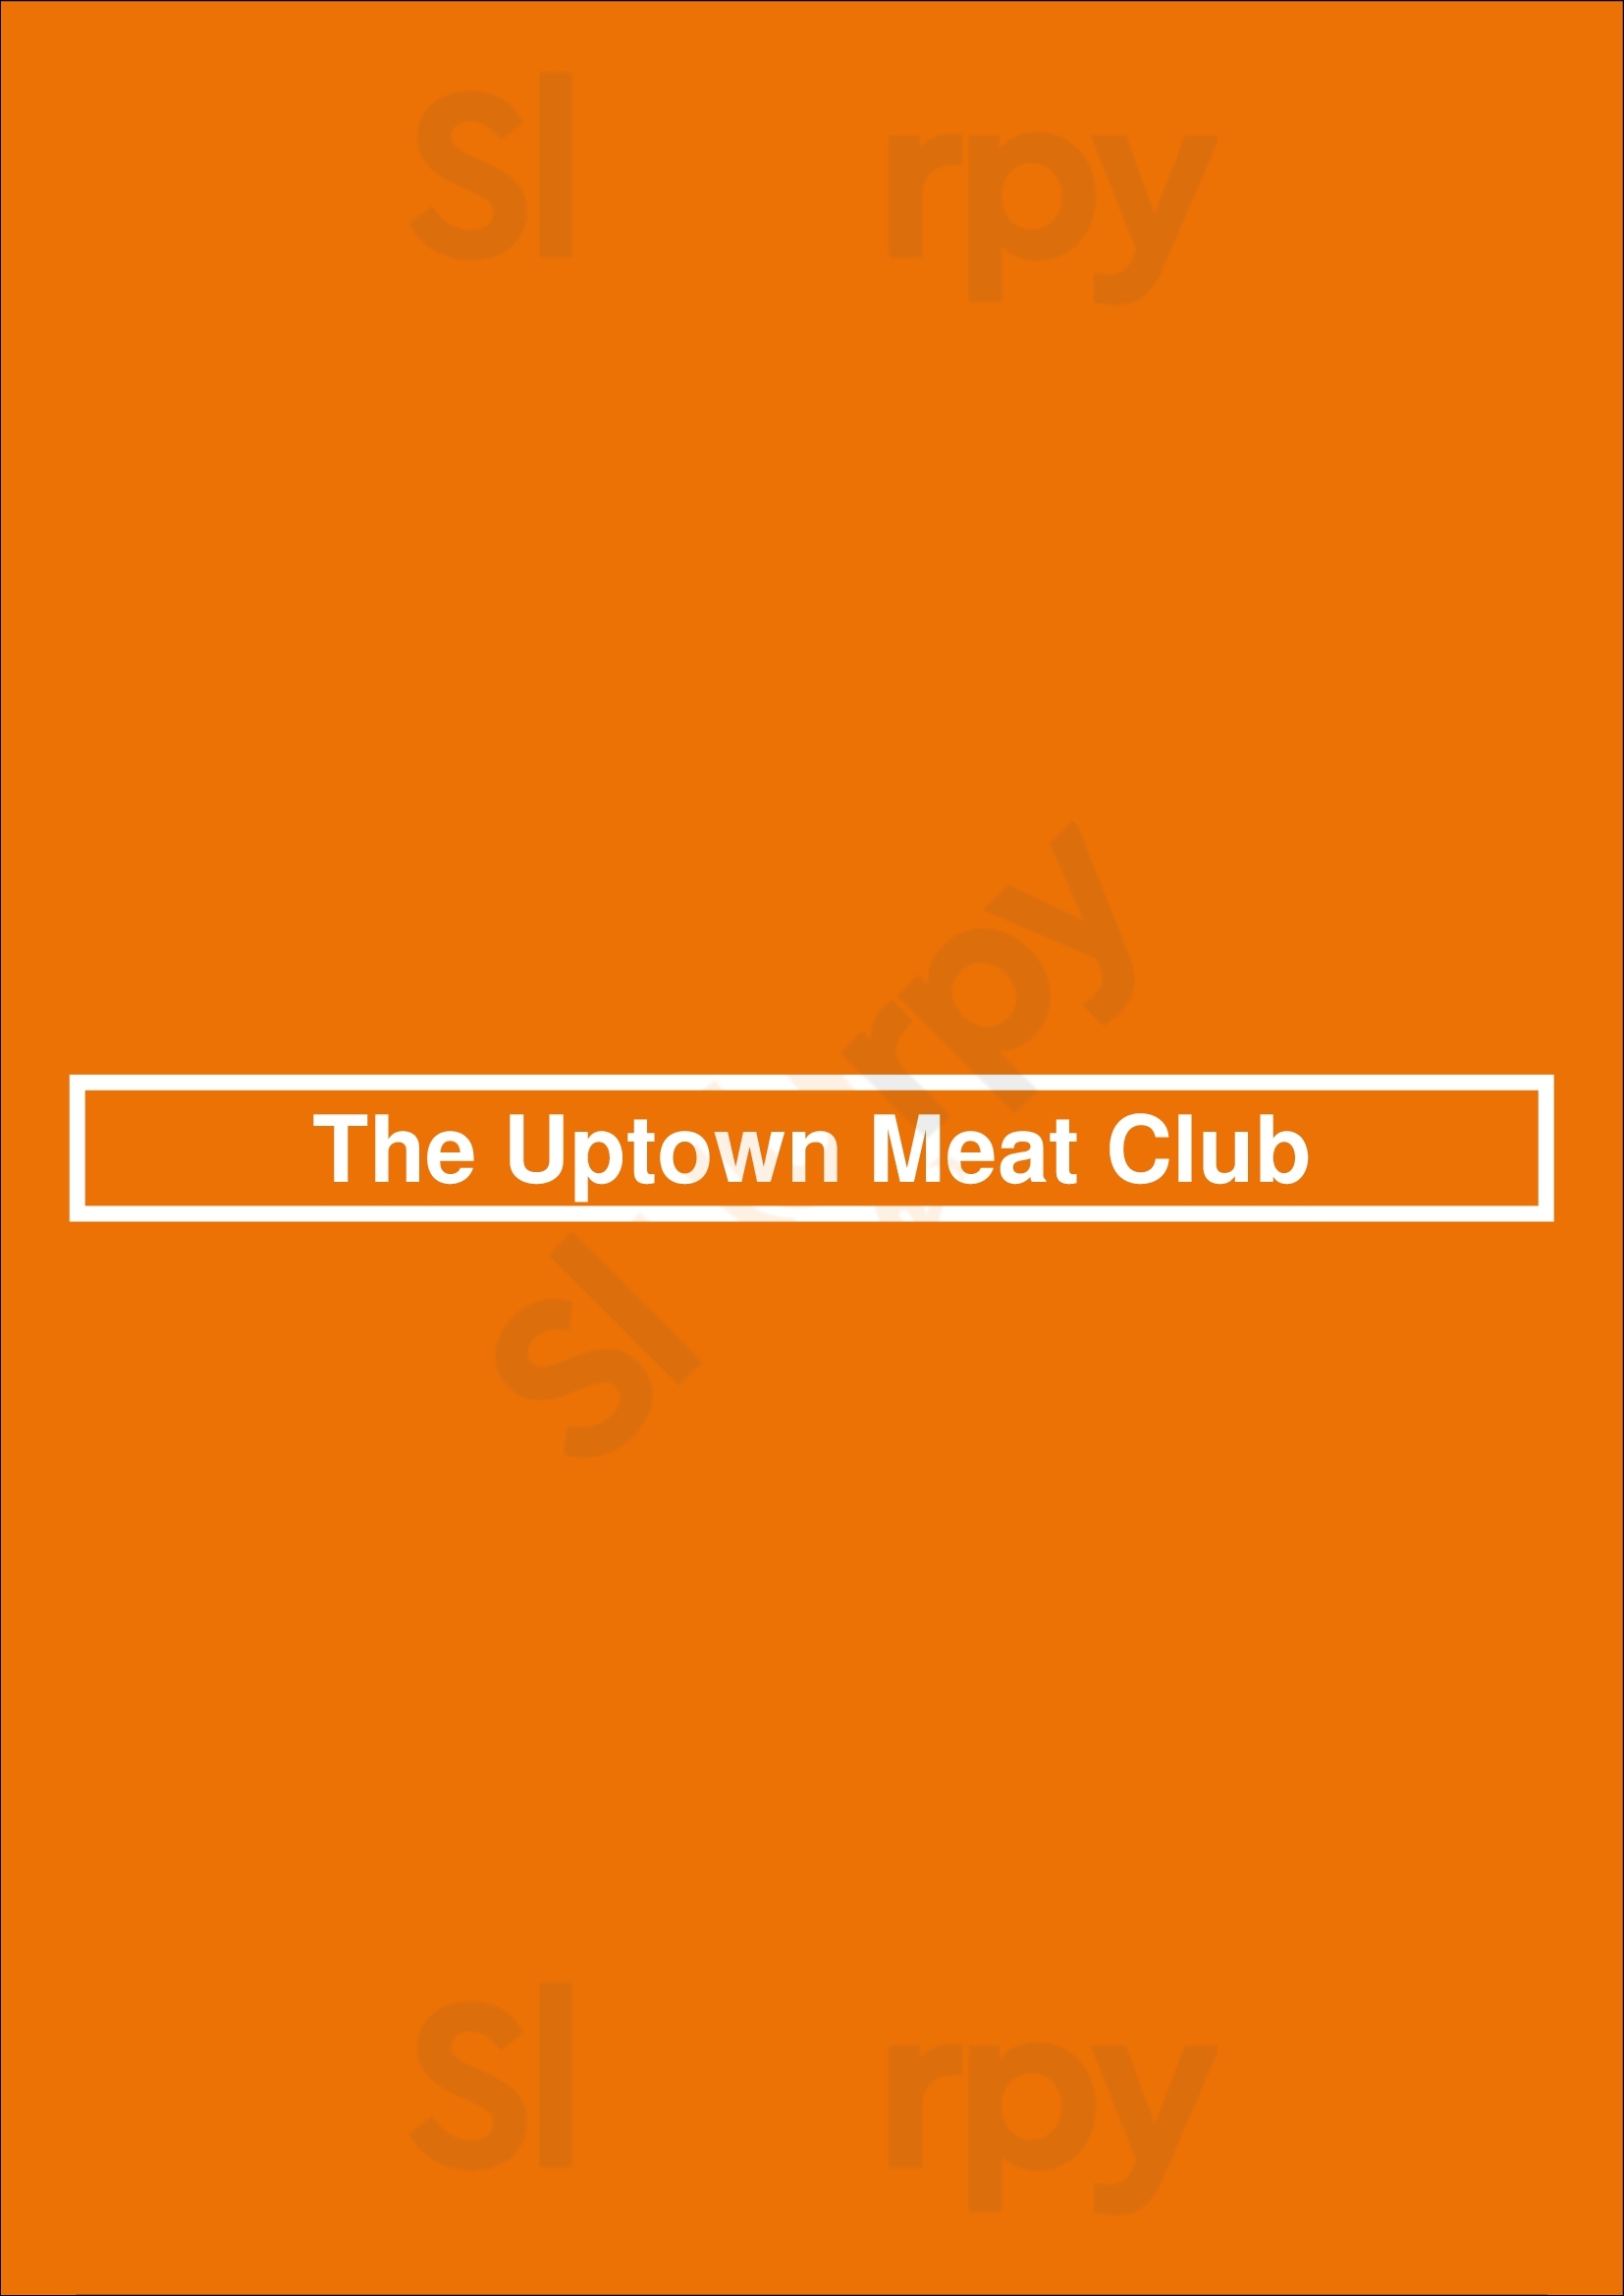 The Uptown Meat Club Amsterdam Menu - 1